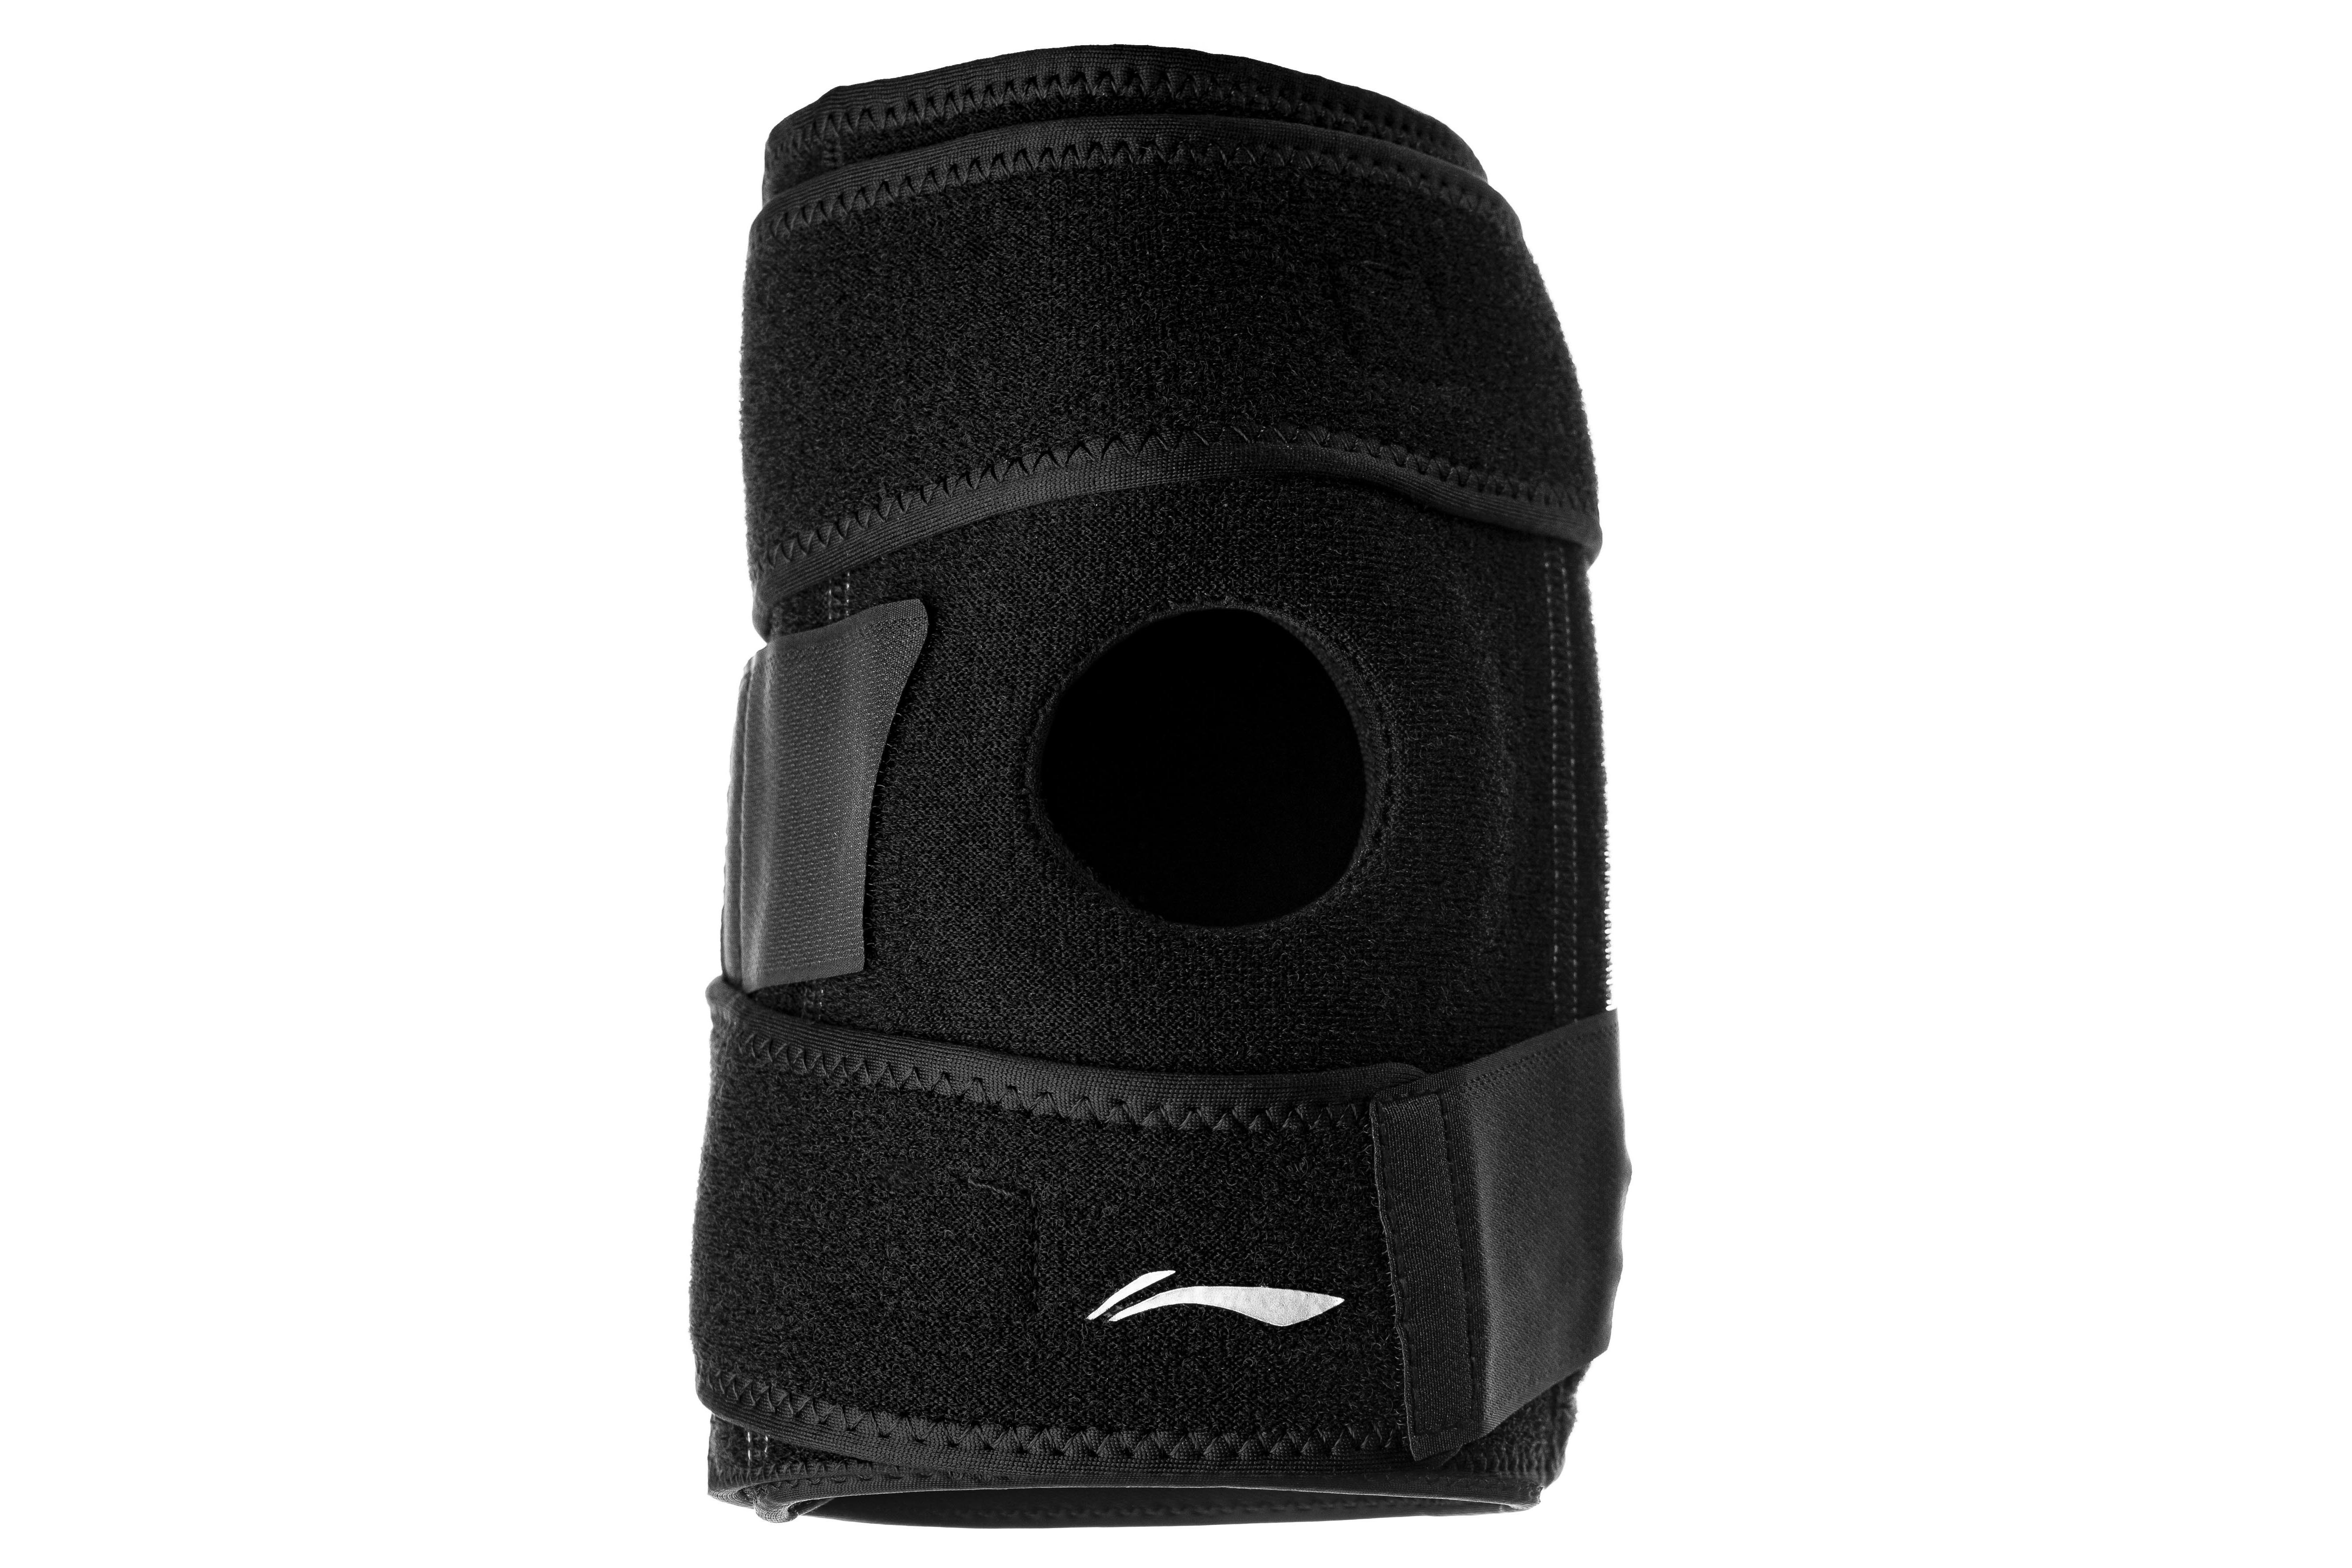 Li-Ning Open Patella Knee Brace AHJP038-1 Right | Tabletennis11.com (TT11)